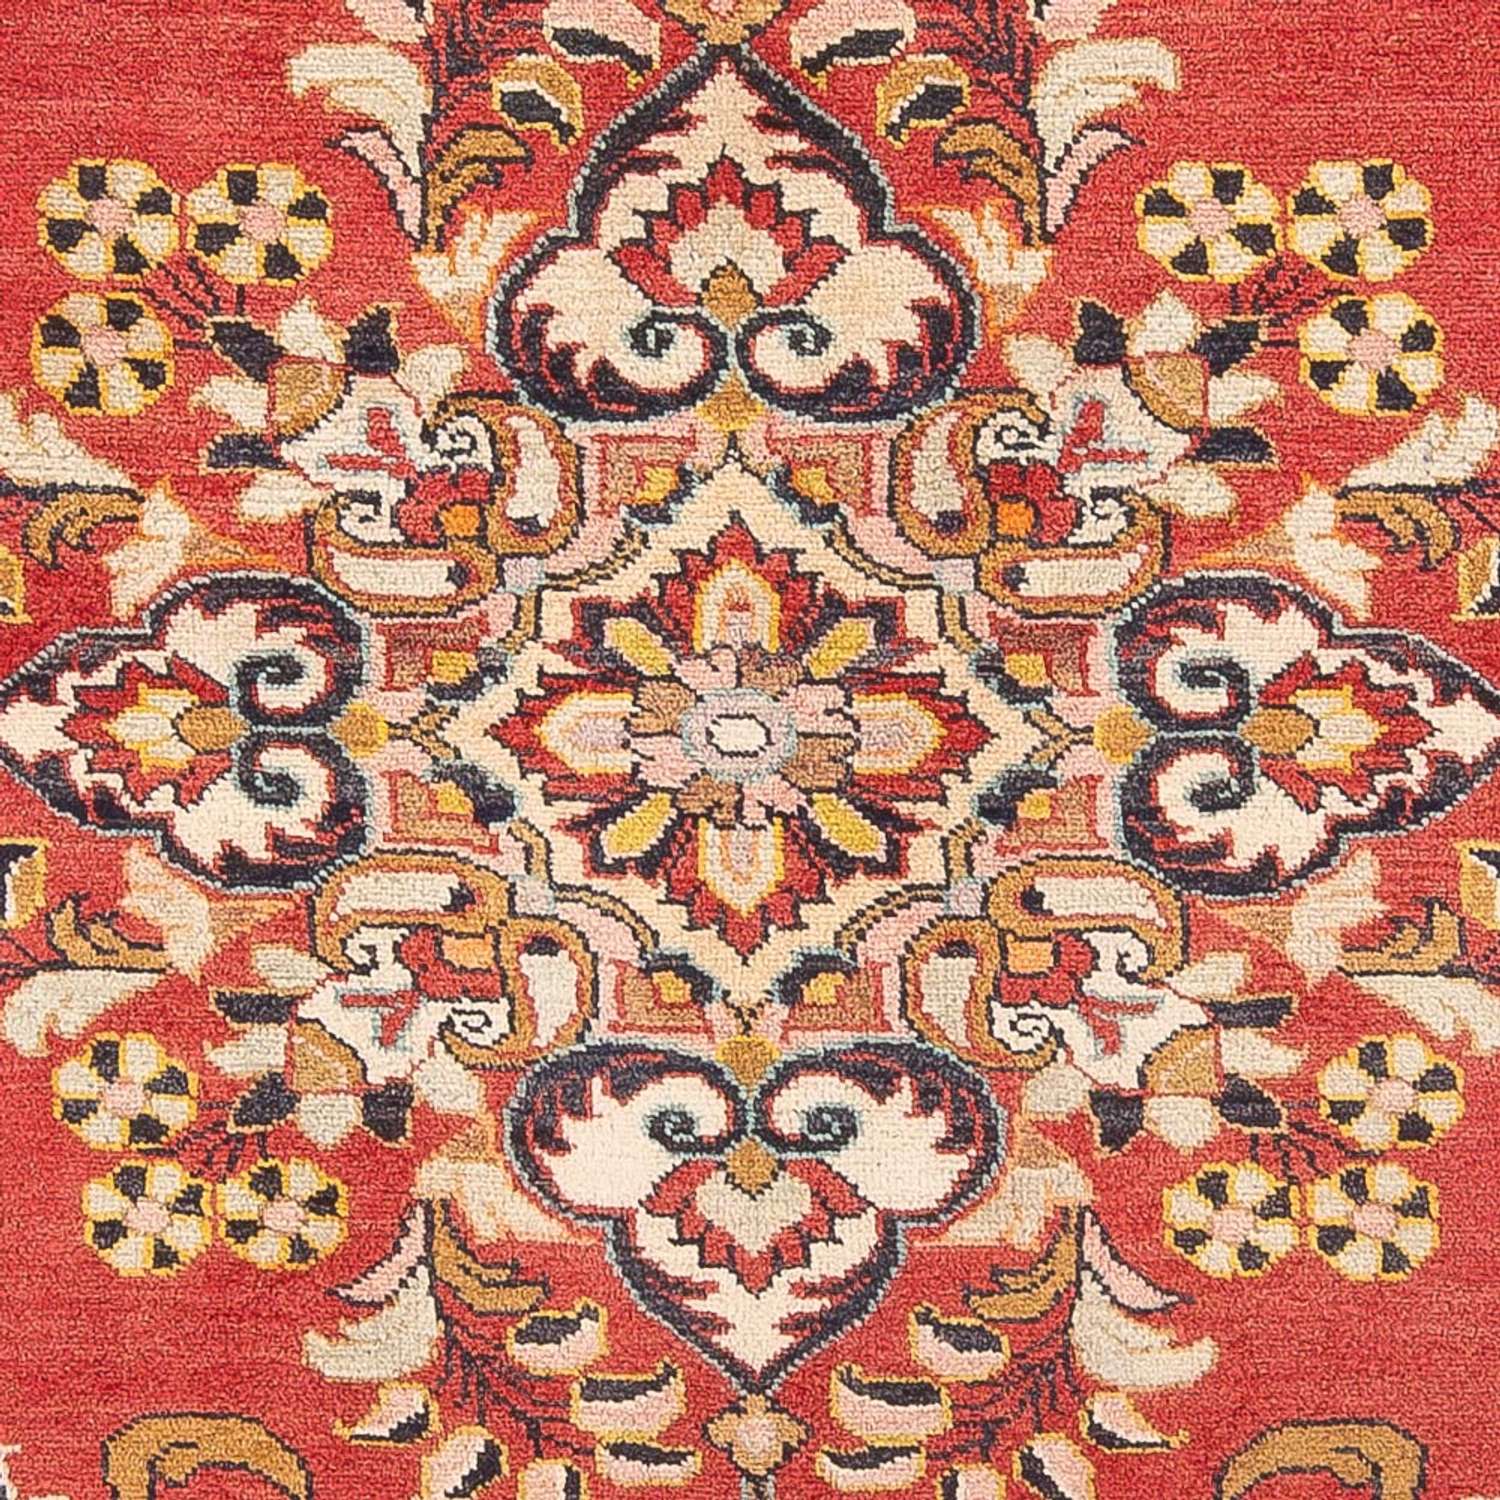 Persisk matta - Nomadic - 210 x 165 cm - röd